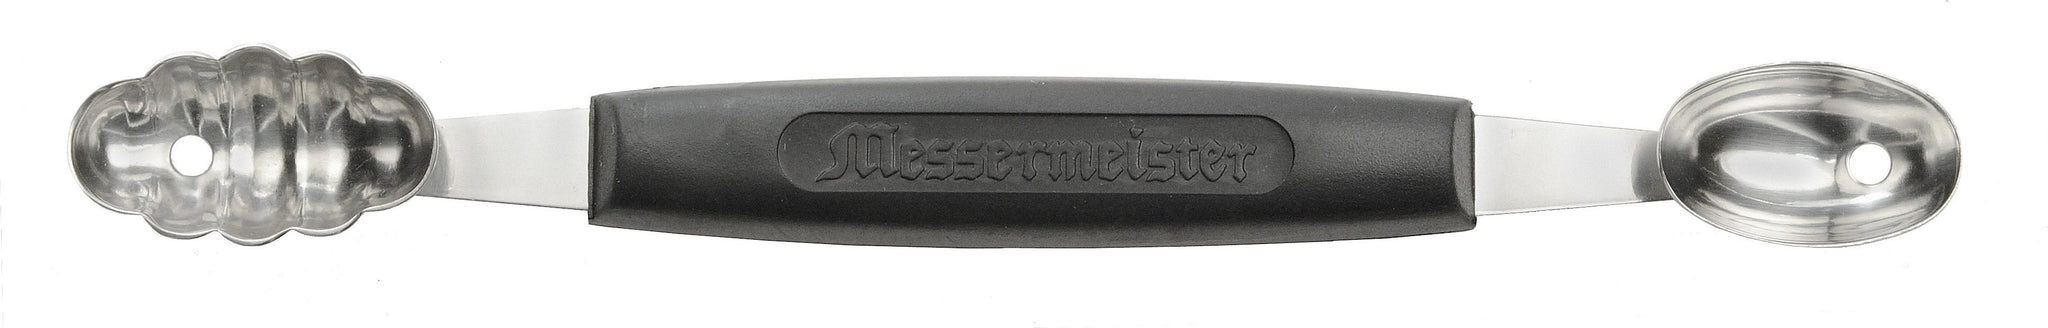 Messermeister - Double-Ended Scalloped & Oval Melon Baller - 164